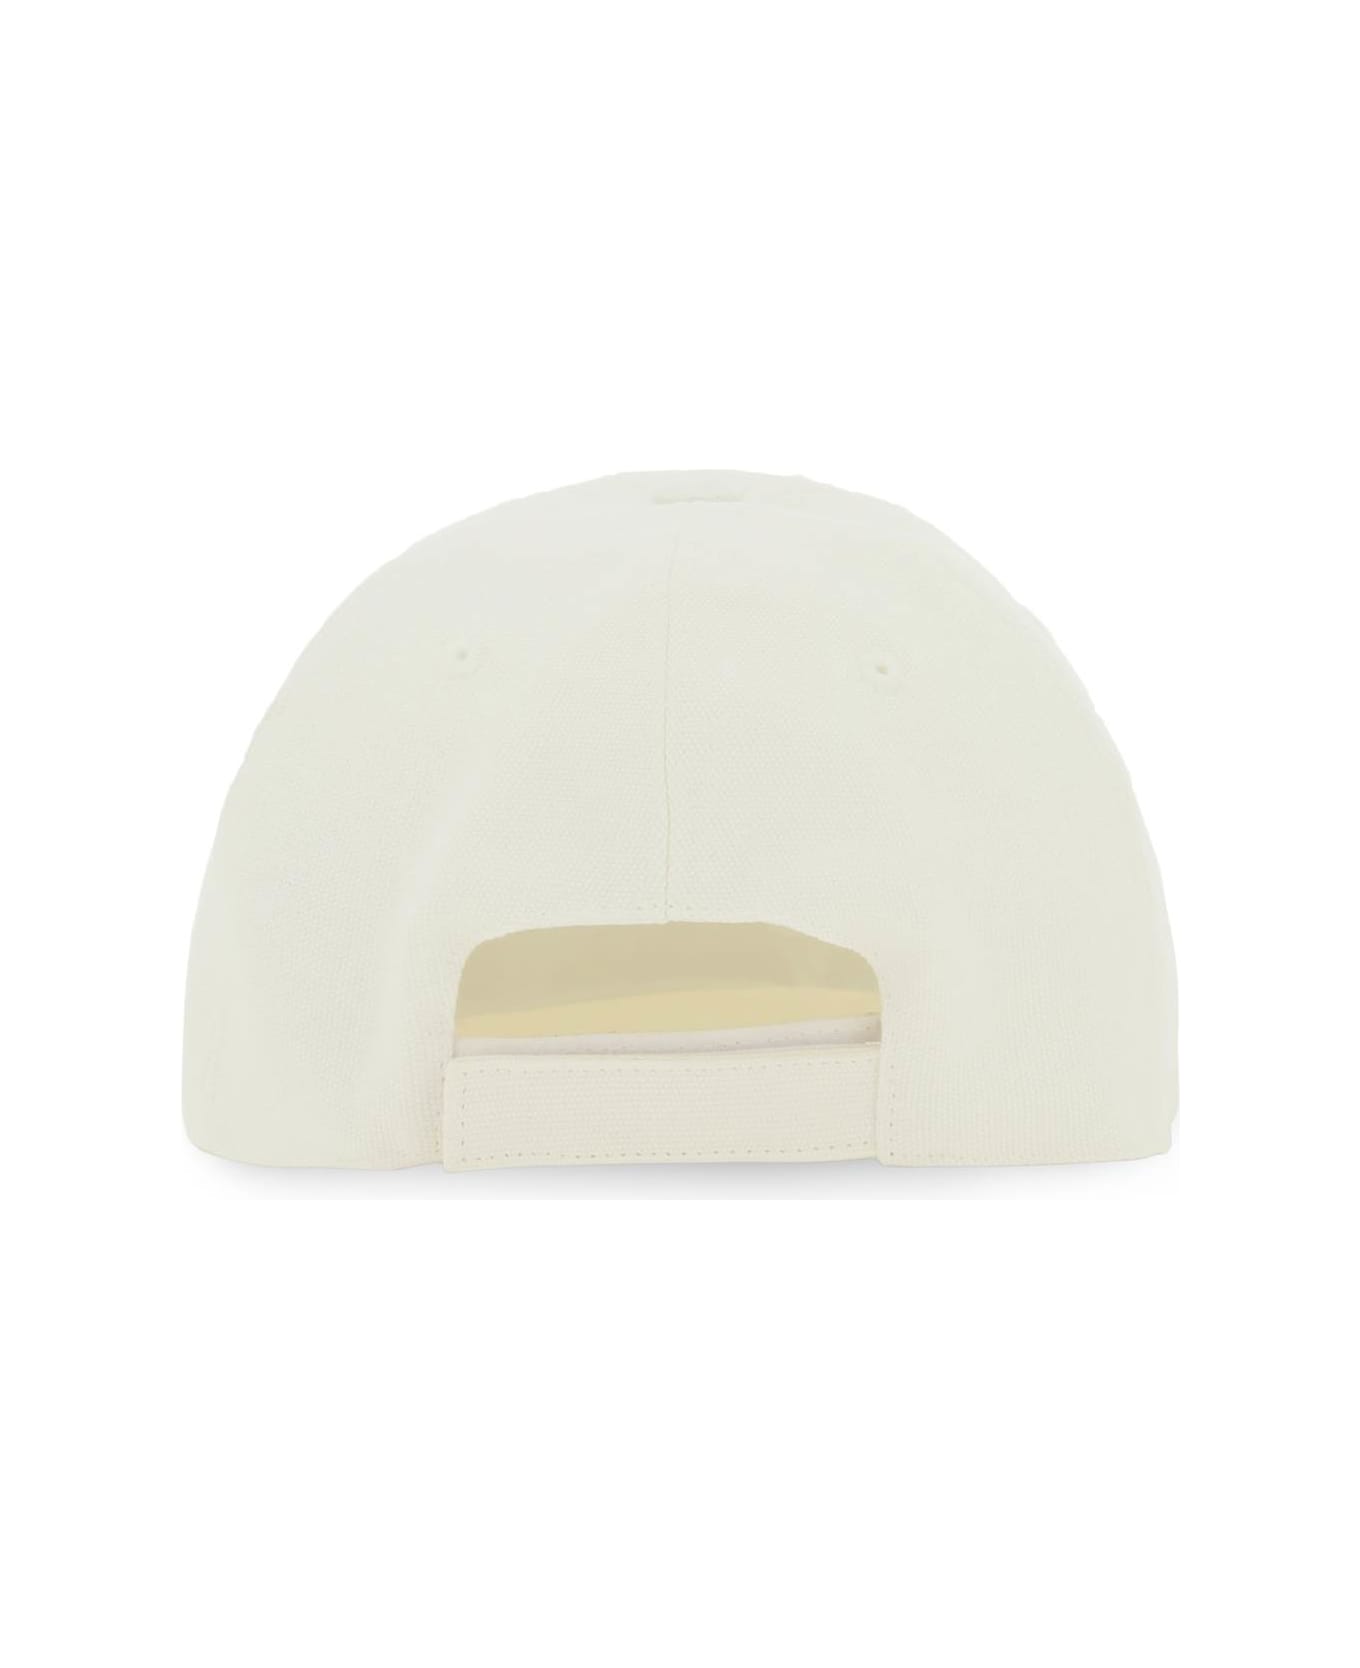 Stella McCartney Logo Baseball Cap - FROST (White) 帽子